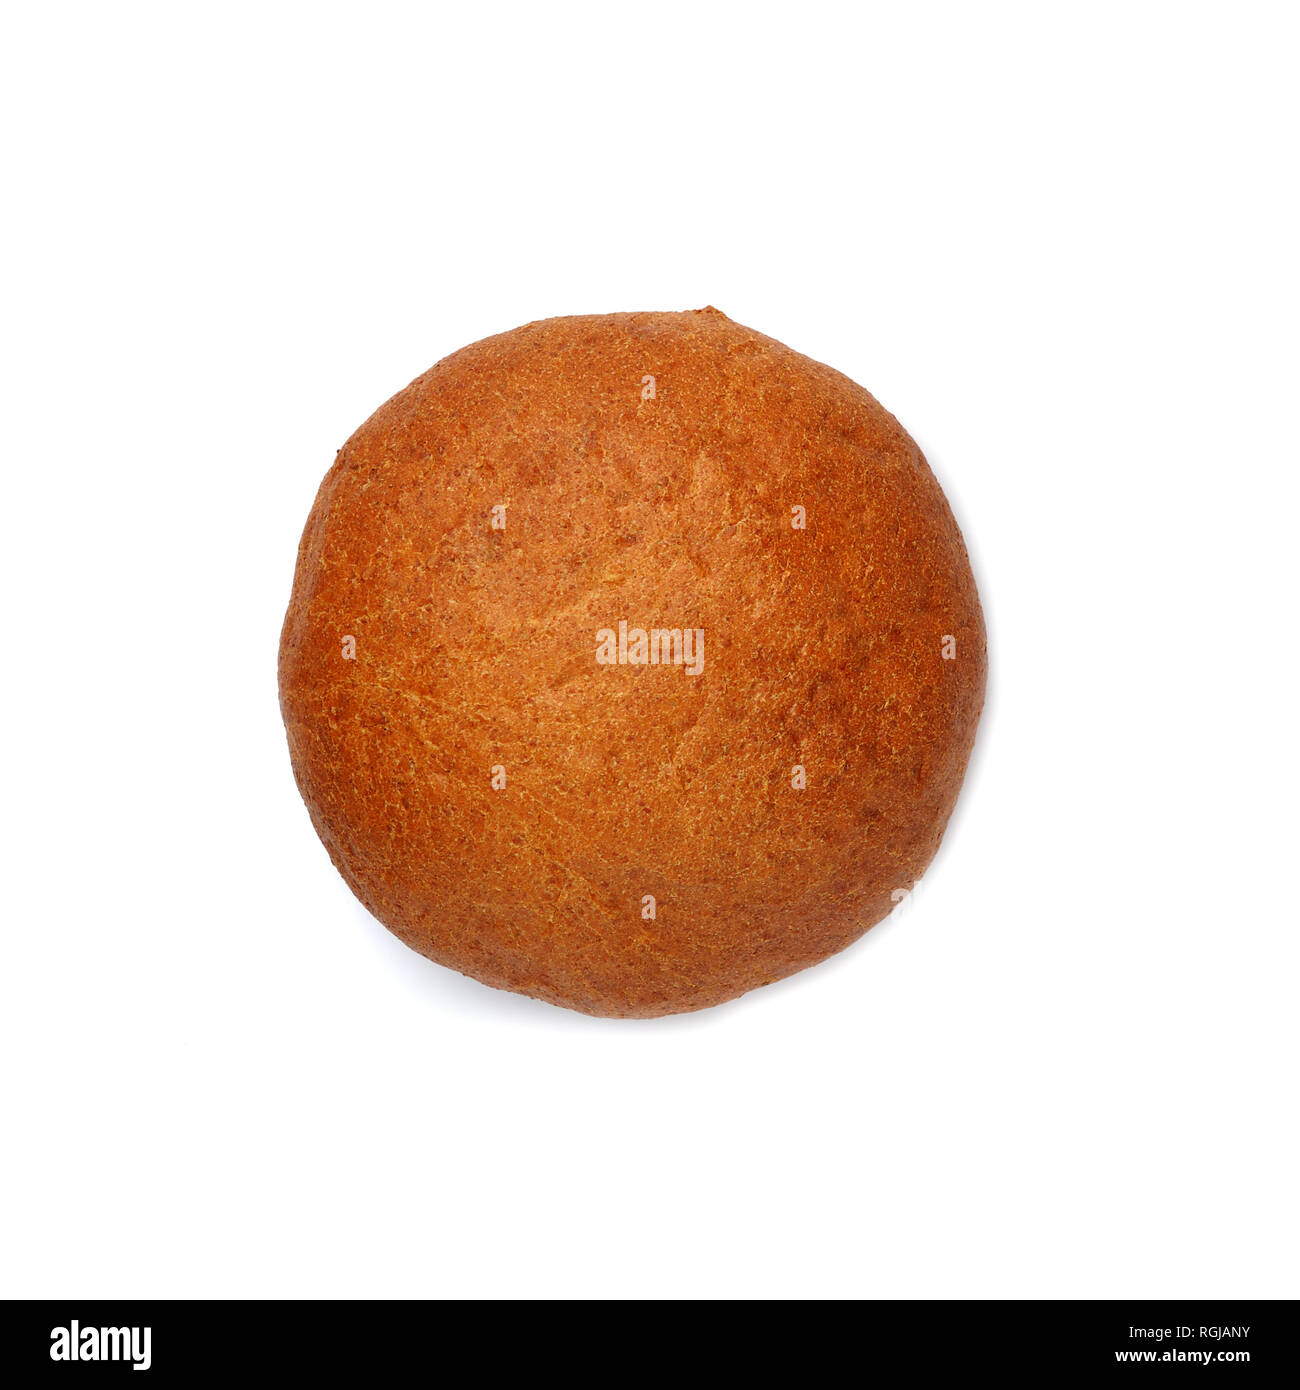 Image of dark round  bread, Pumpernickel Stock Photo